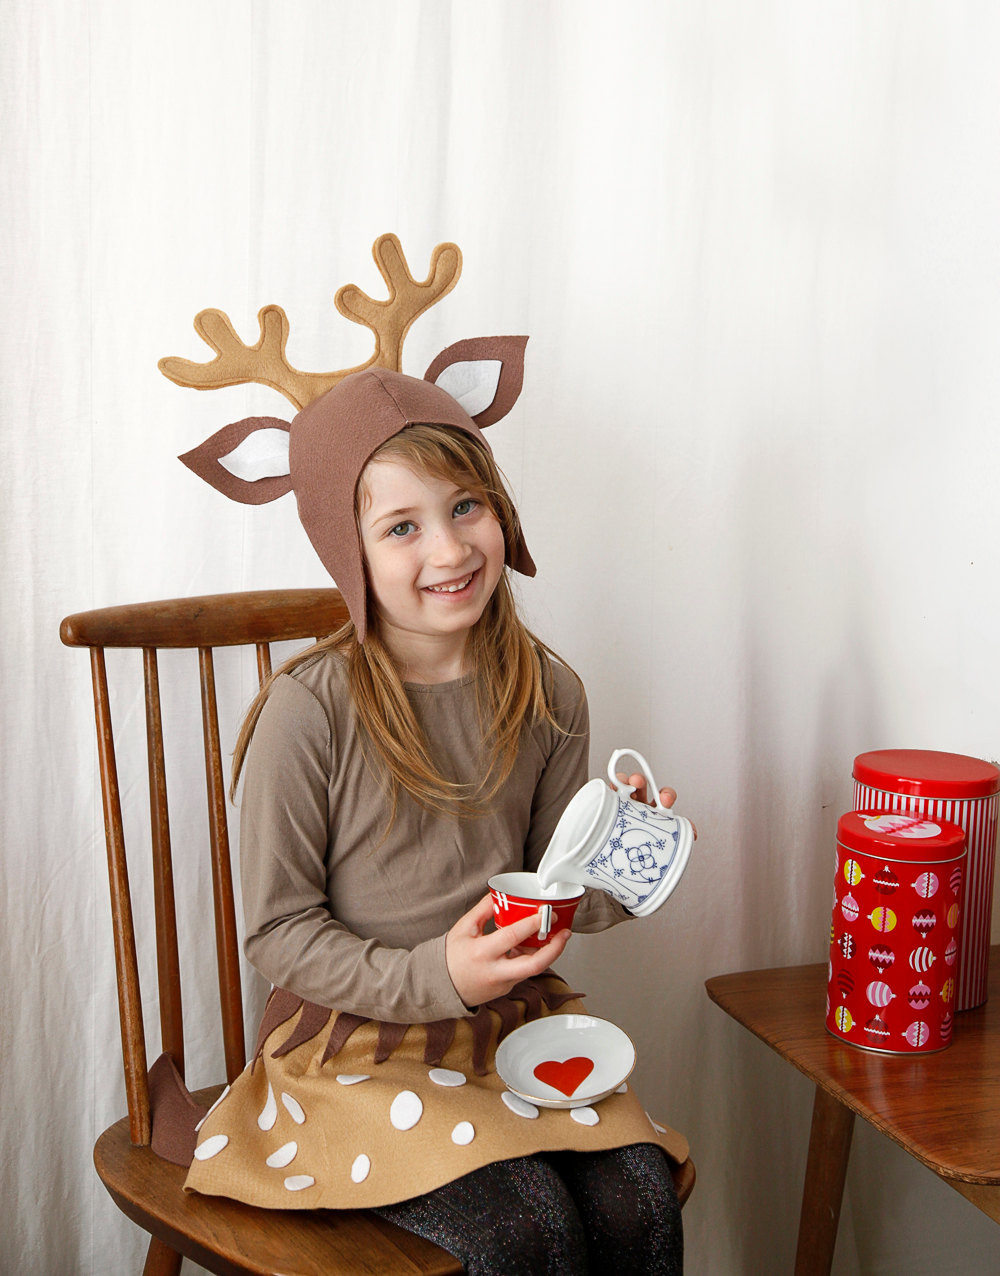 Best ideas about DIY Reindeer Costumes
. Save or Pin Reindeer PATTERN DIY costume mask sewing tutorial creative Now.